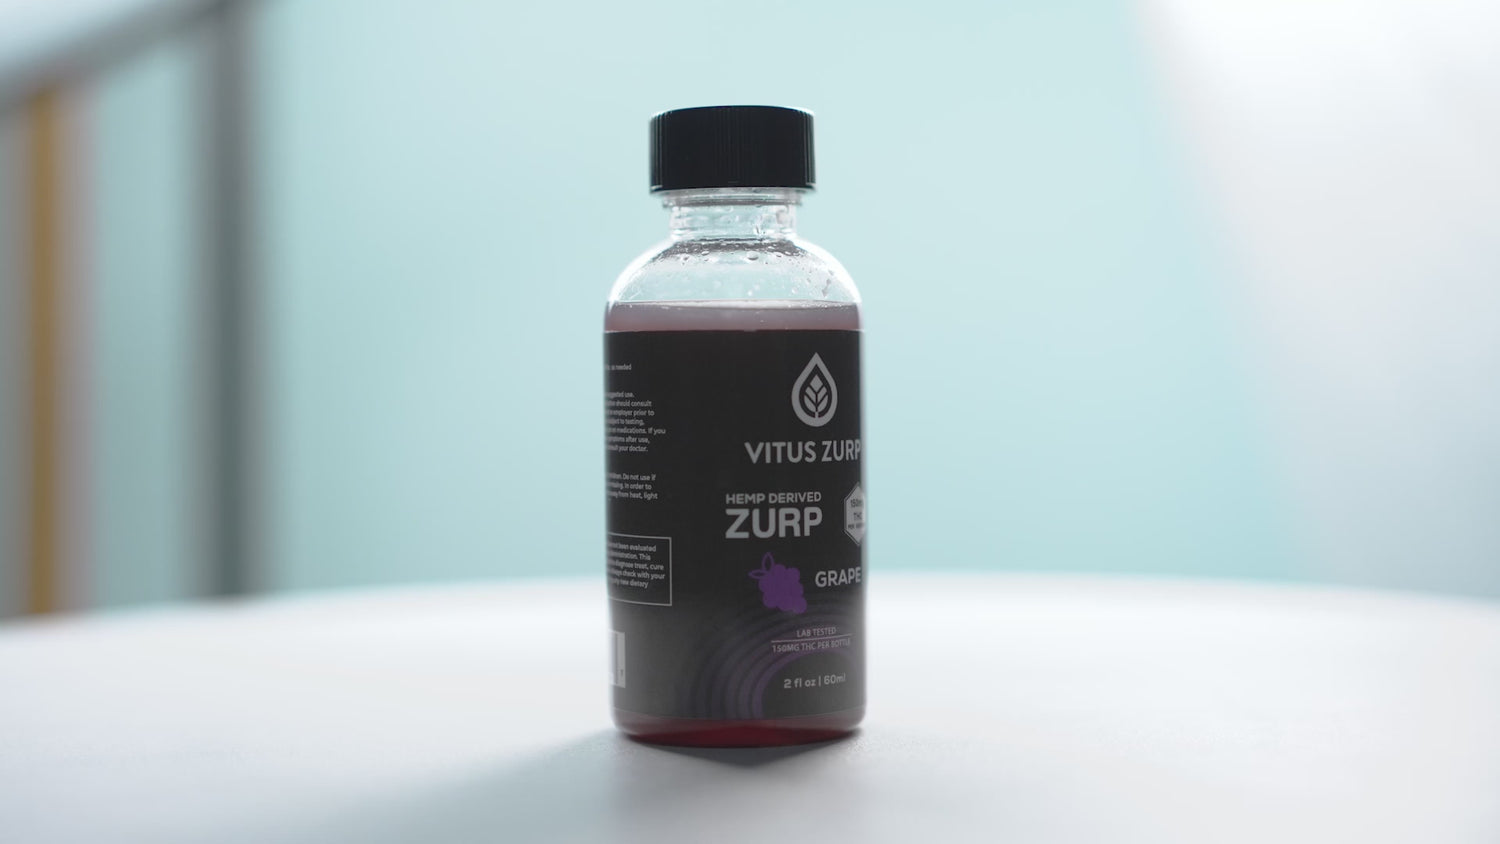 Vitus Zurp - Grape